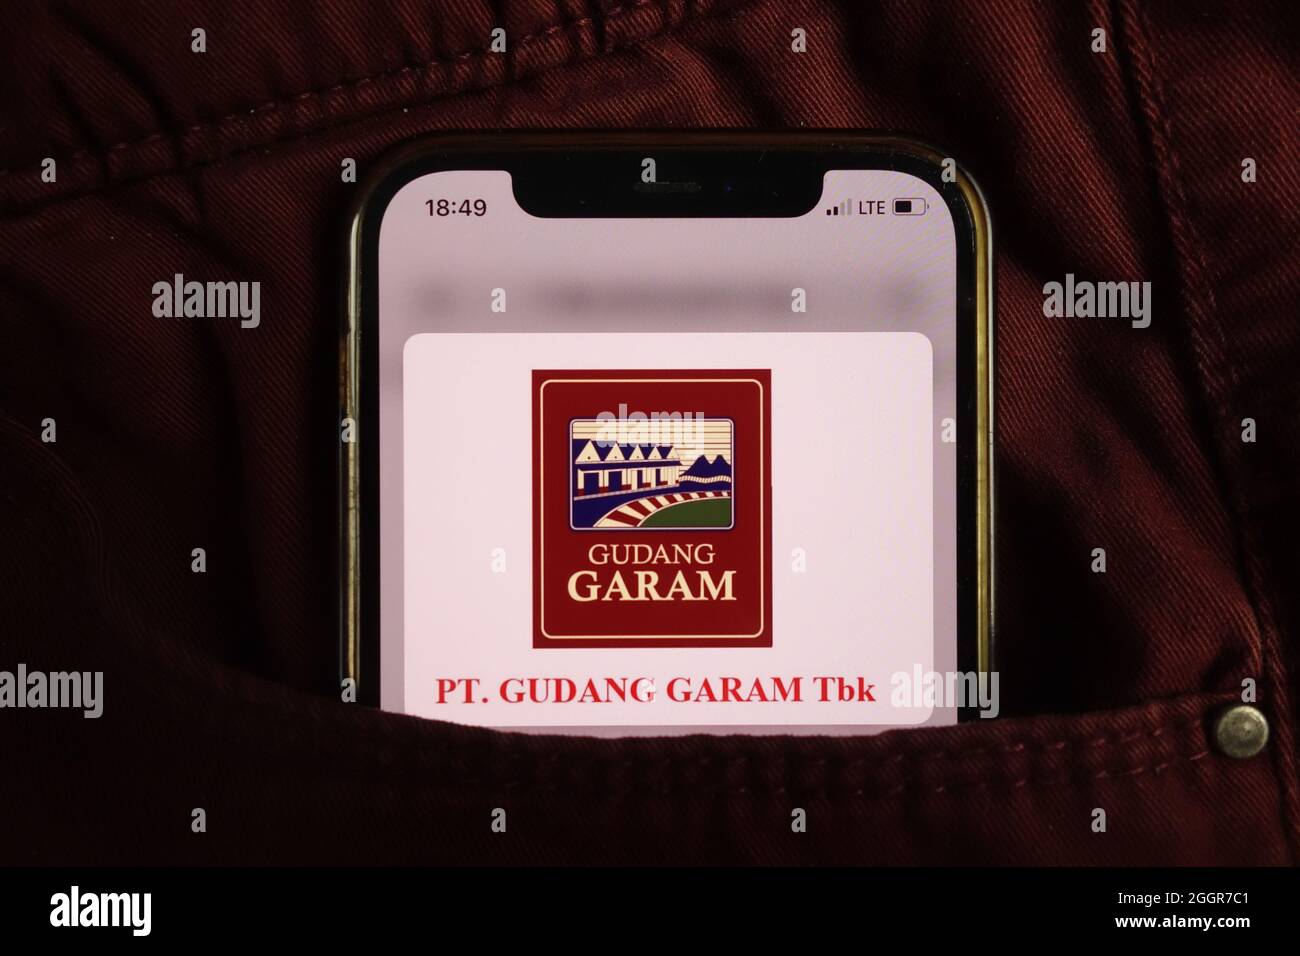 KONSKIE, POLAND - August 17, 2021: PT Gudang Garam Tbk logo displayed on mobile phone hidden in jeans pocket Stock Photo